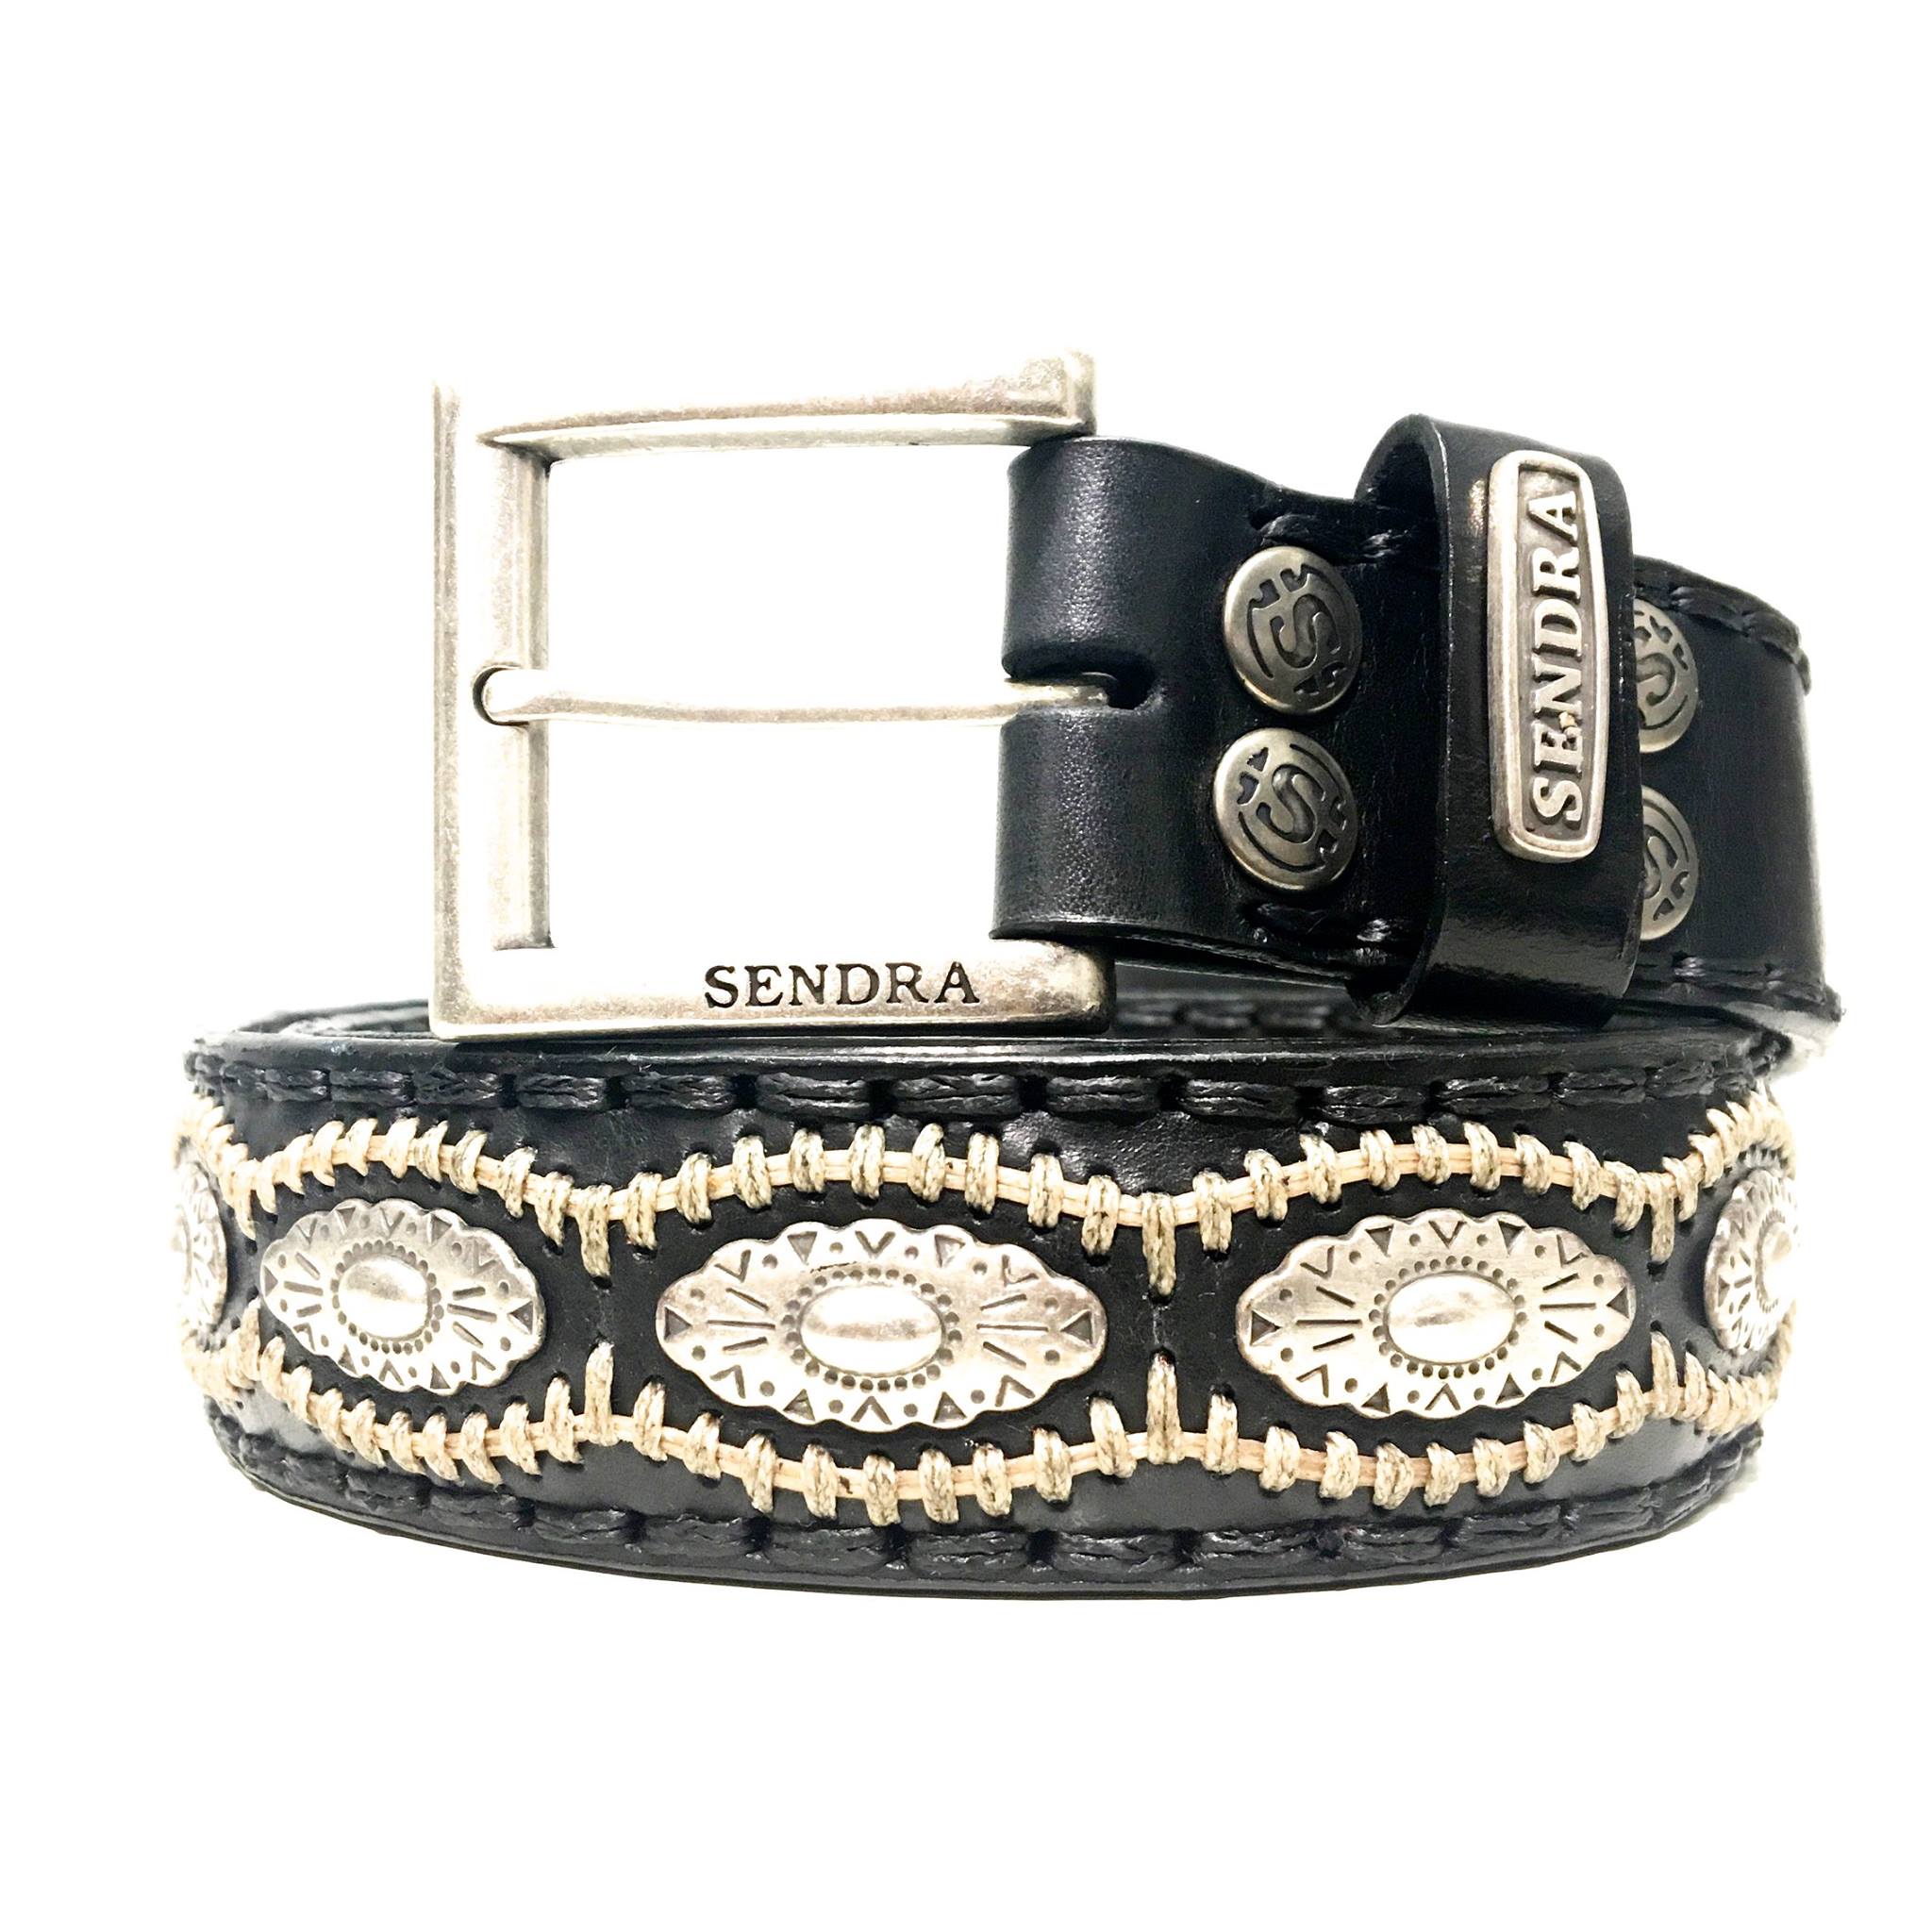 Sendra belt - 7606 black/cream